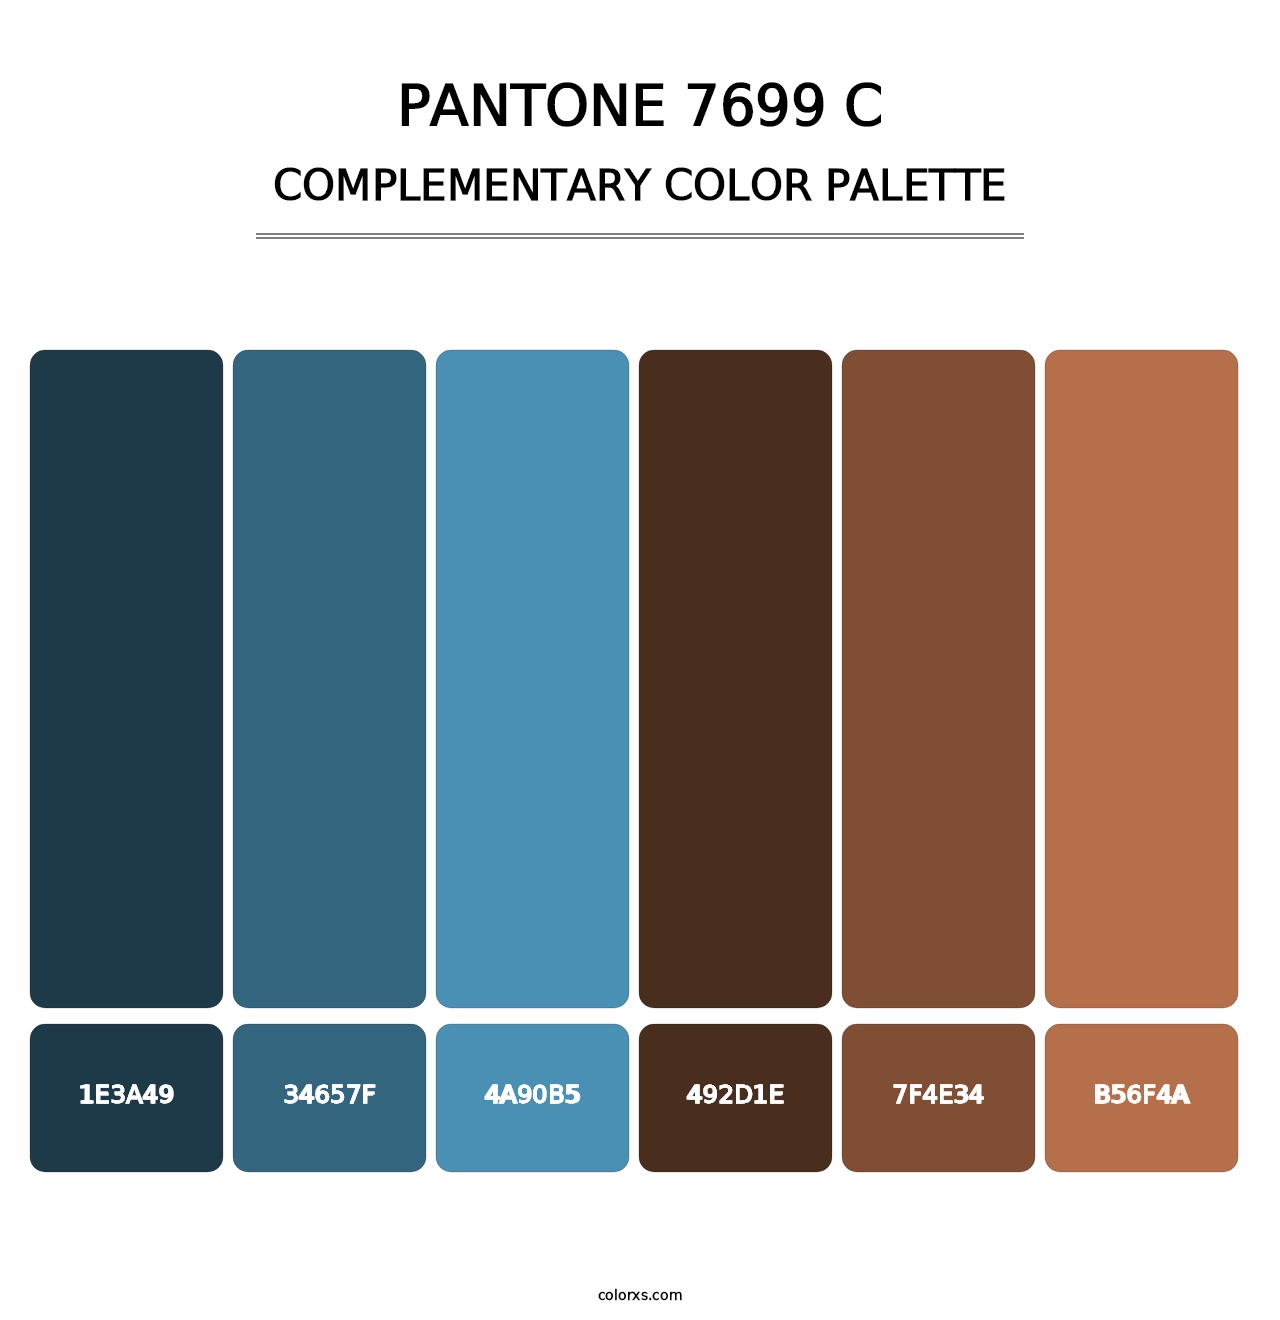 PANTONE 7699 C - Complementary Color Palette